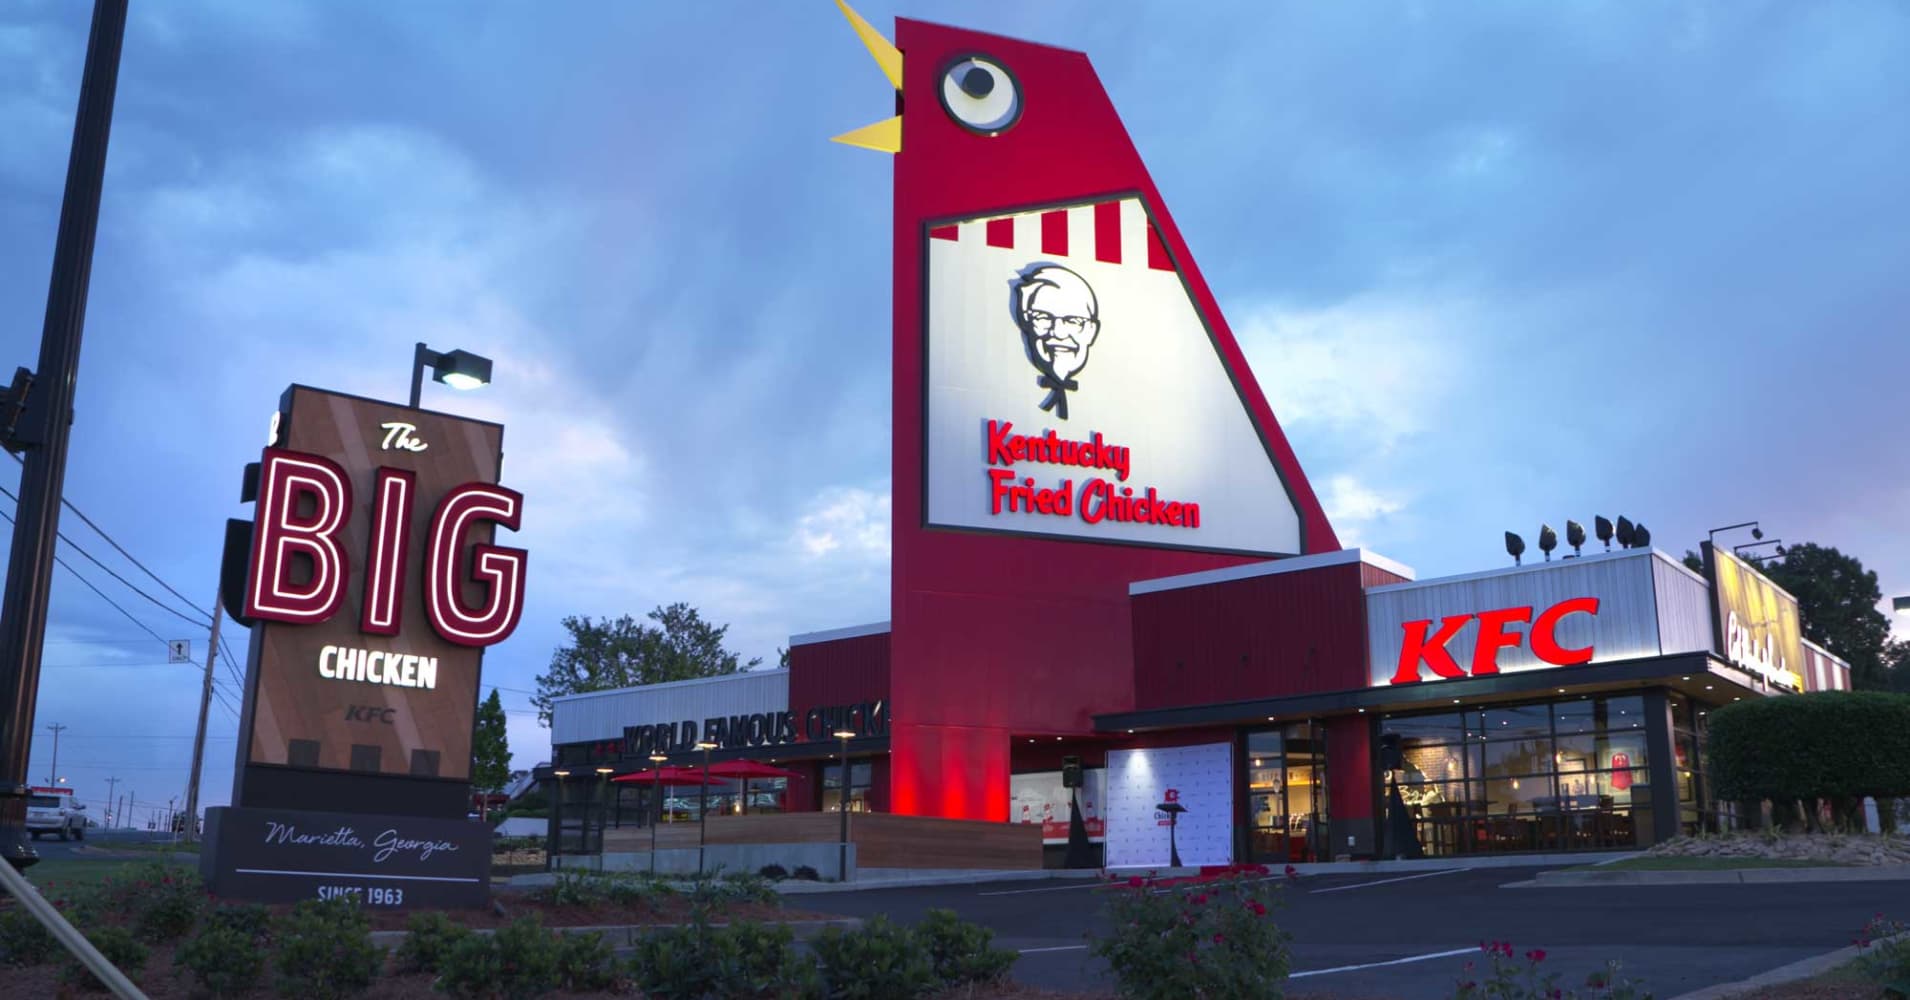 KFC spent $2 million to revamp this one restaurant